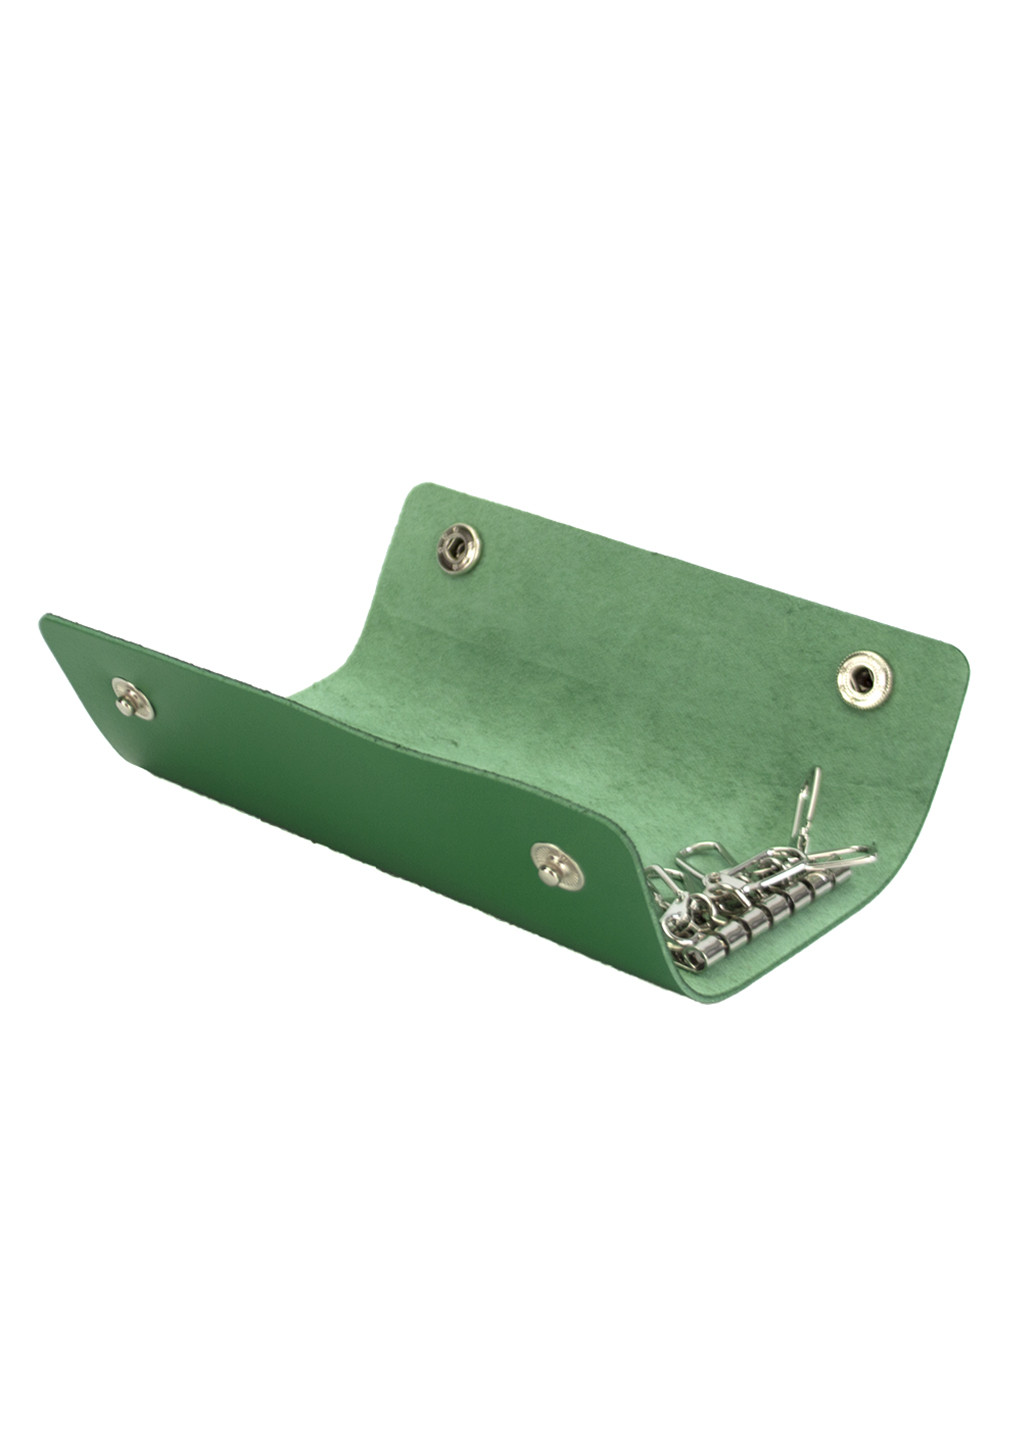 Ключница кожаная на кнопках с карабинами зелёная HC0077 green HandyCover (253262513)